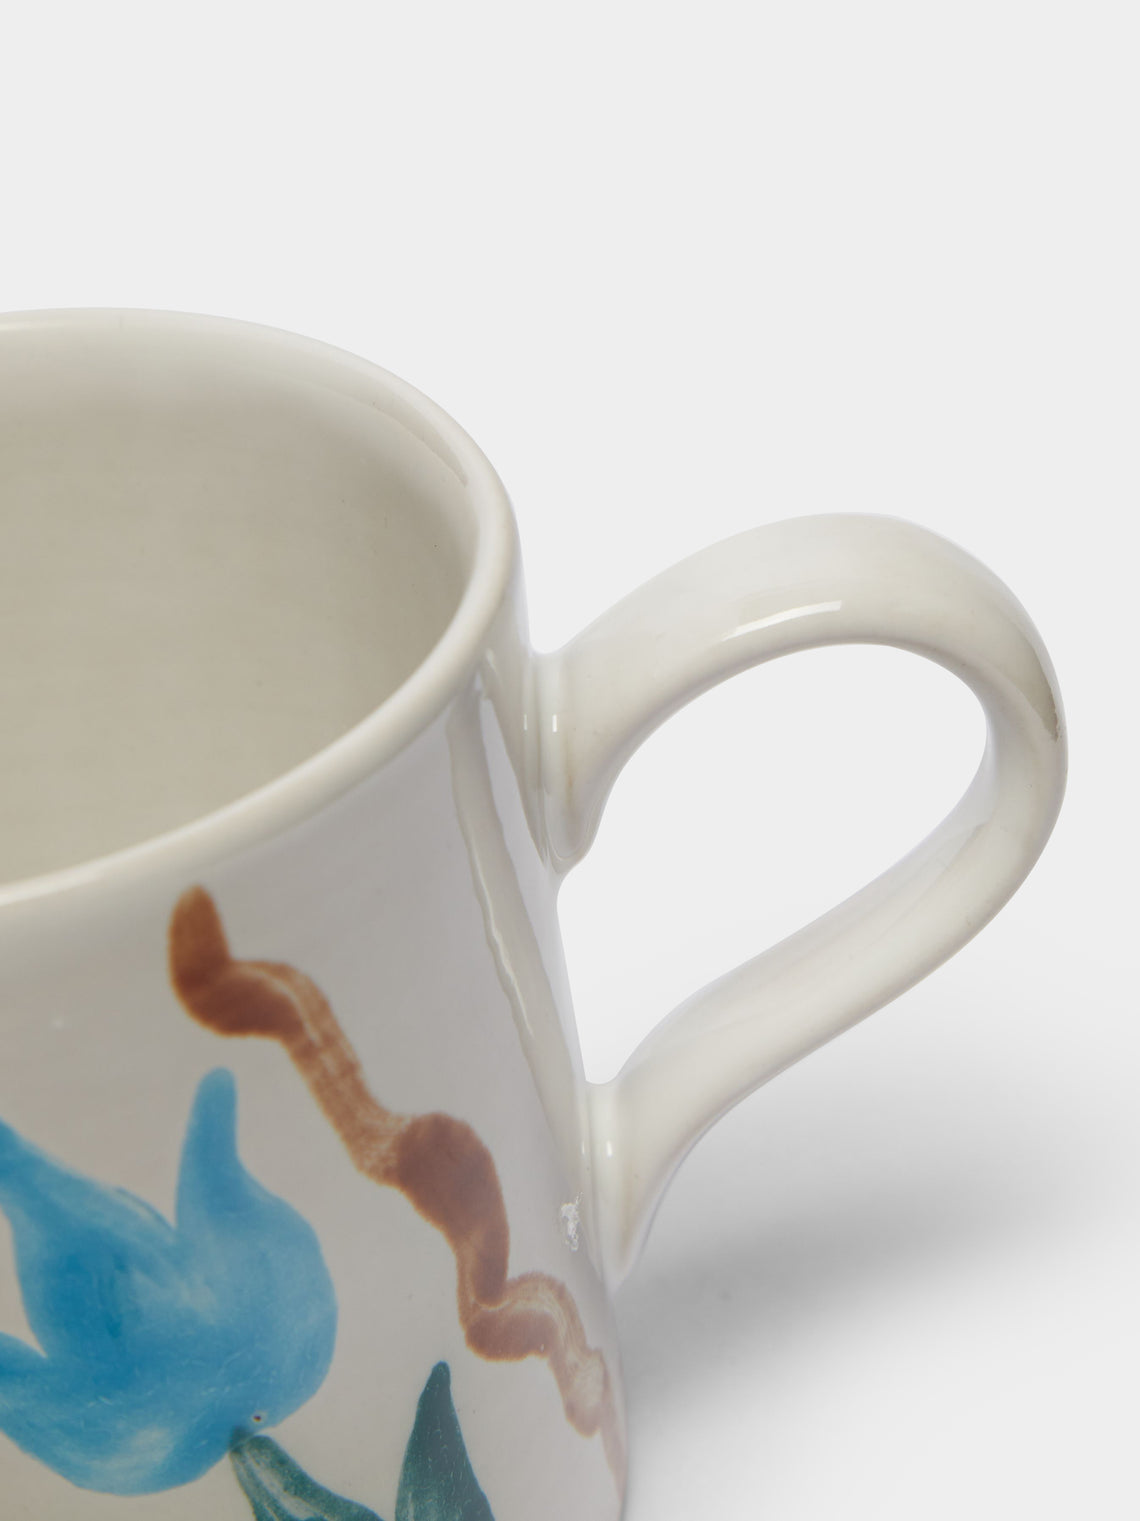 Zsuzsanna Nyul - Hand-Painted Ceramic Mug -  - ABASK